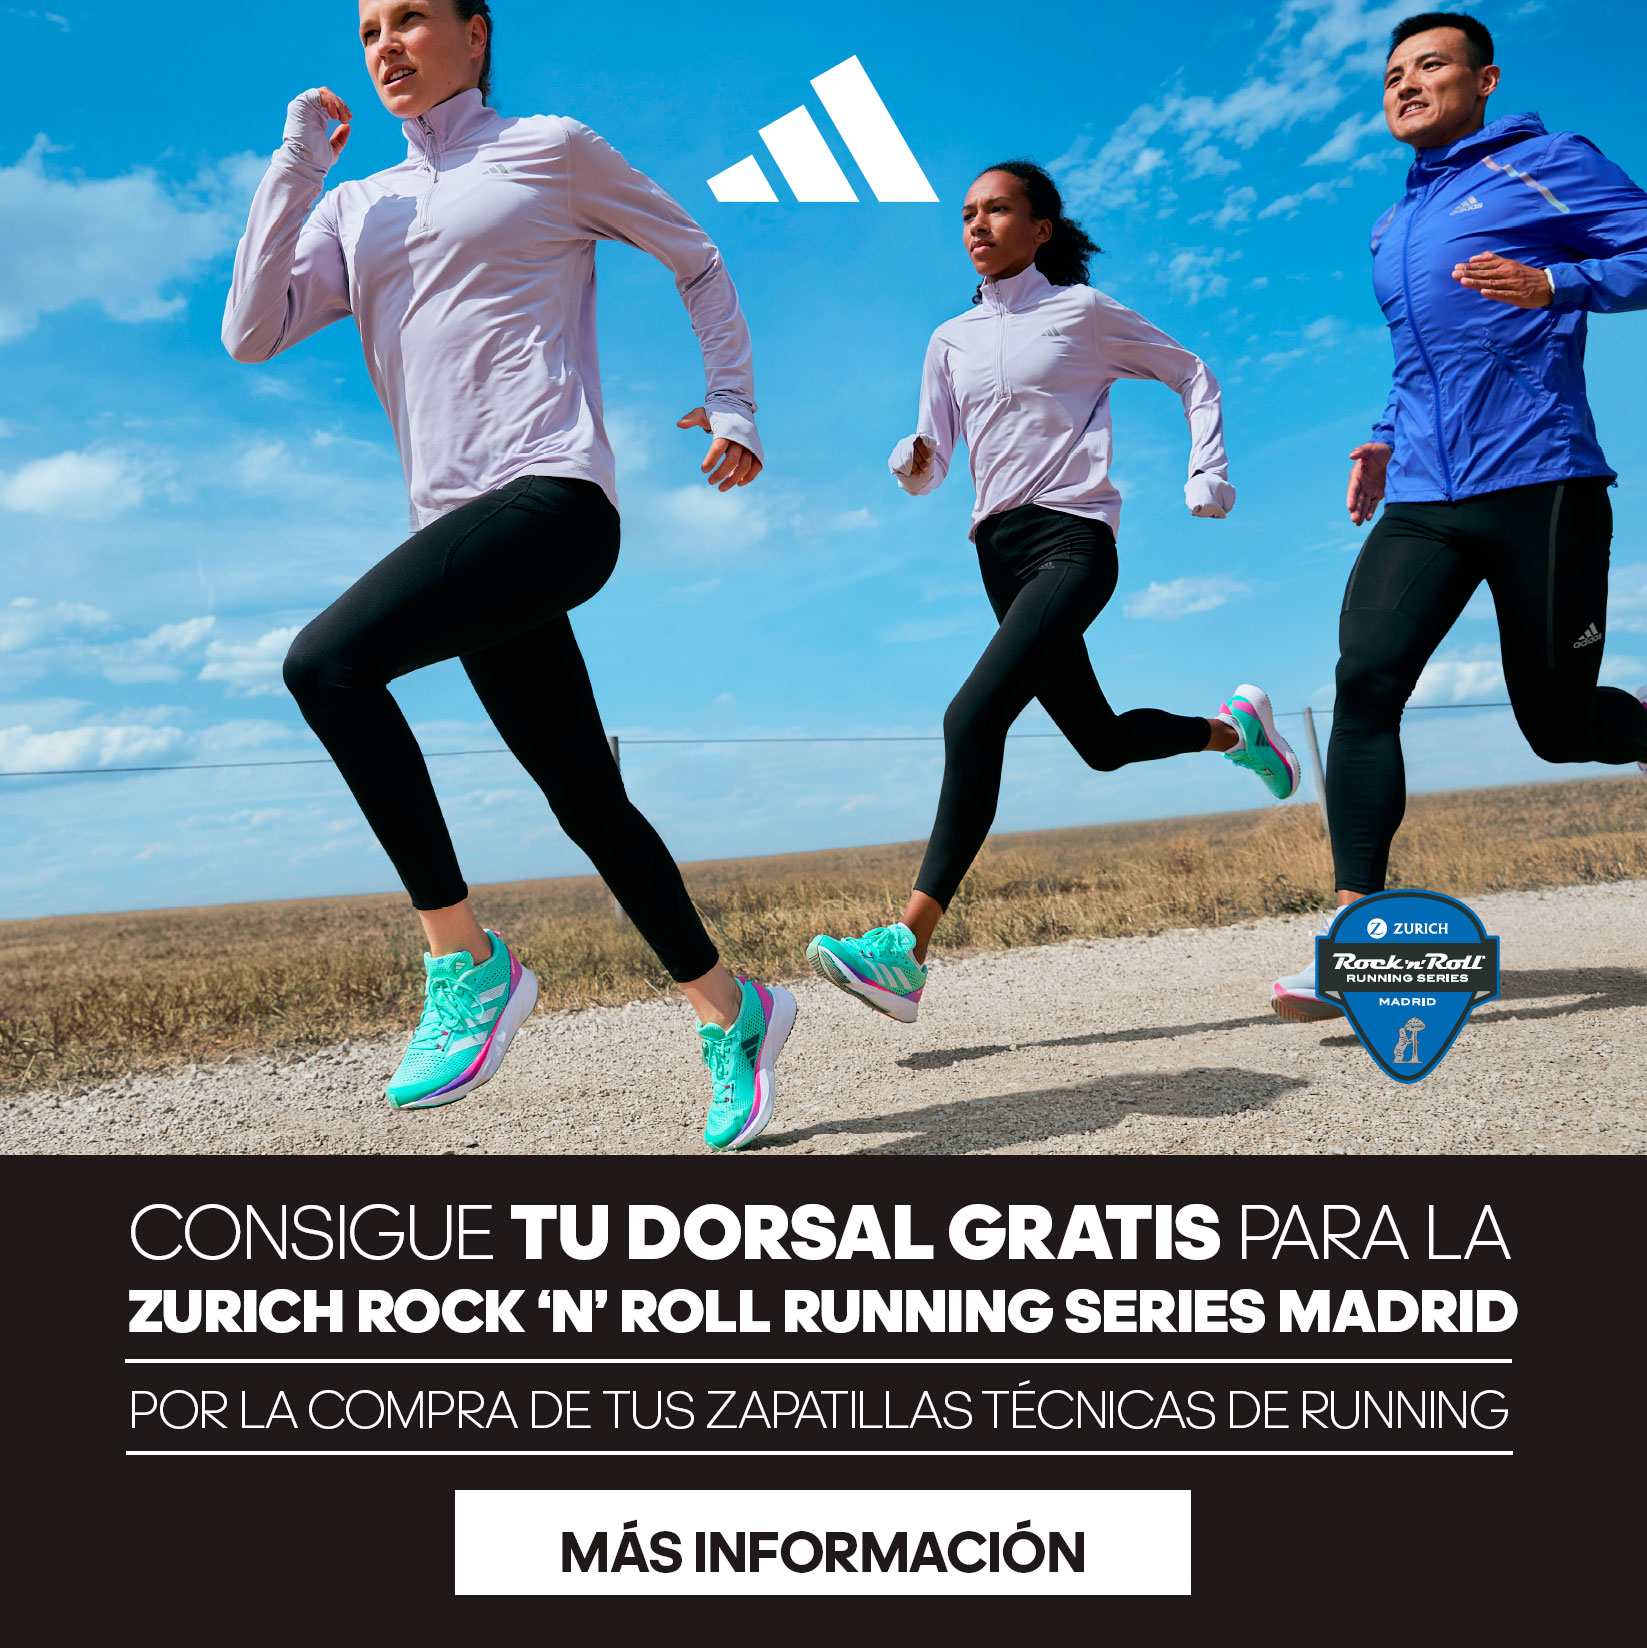 Promoción Adidas - Zurich 'n' Roll Running Series